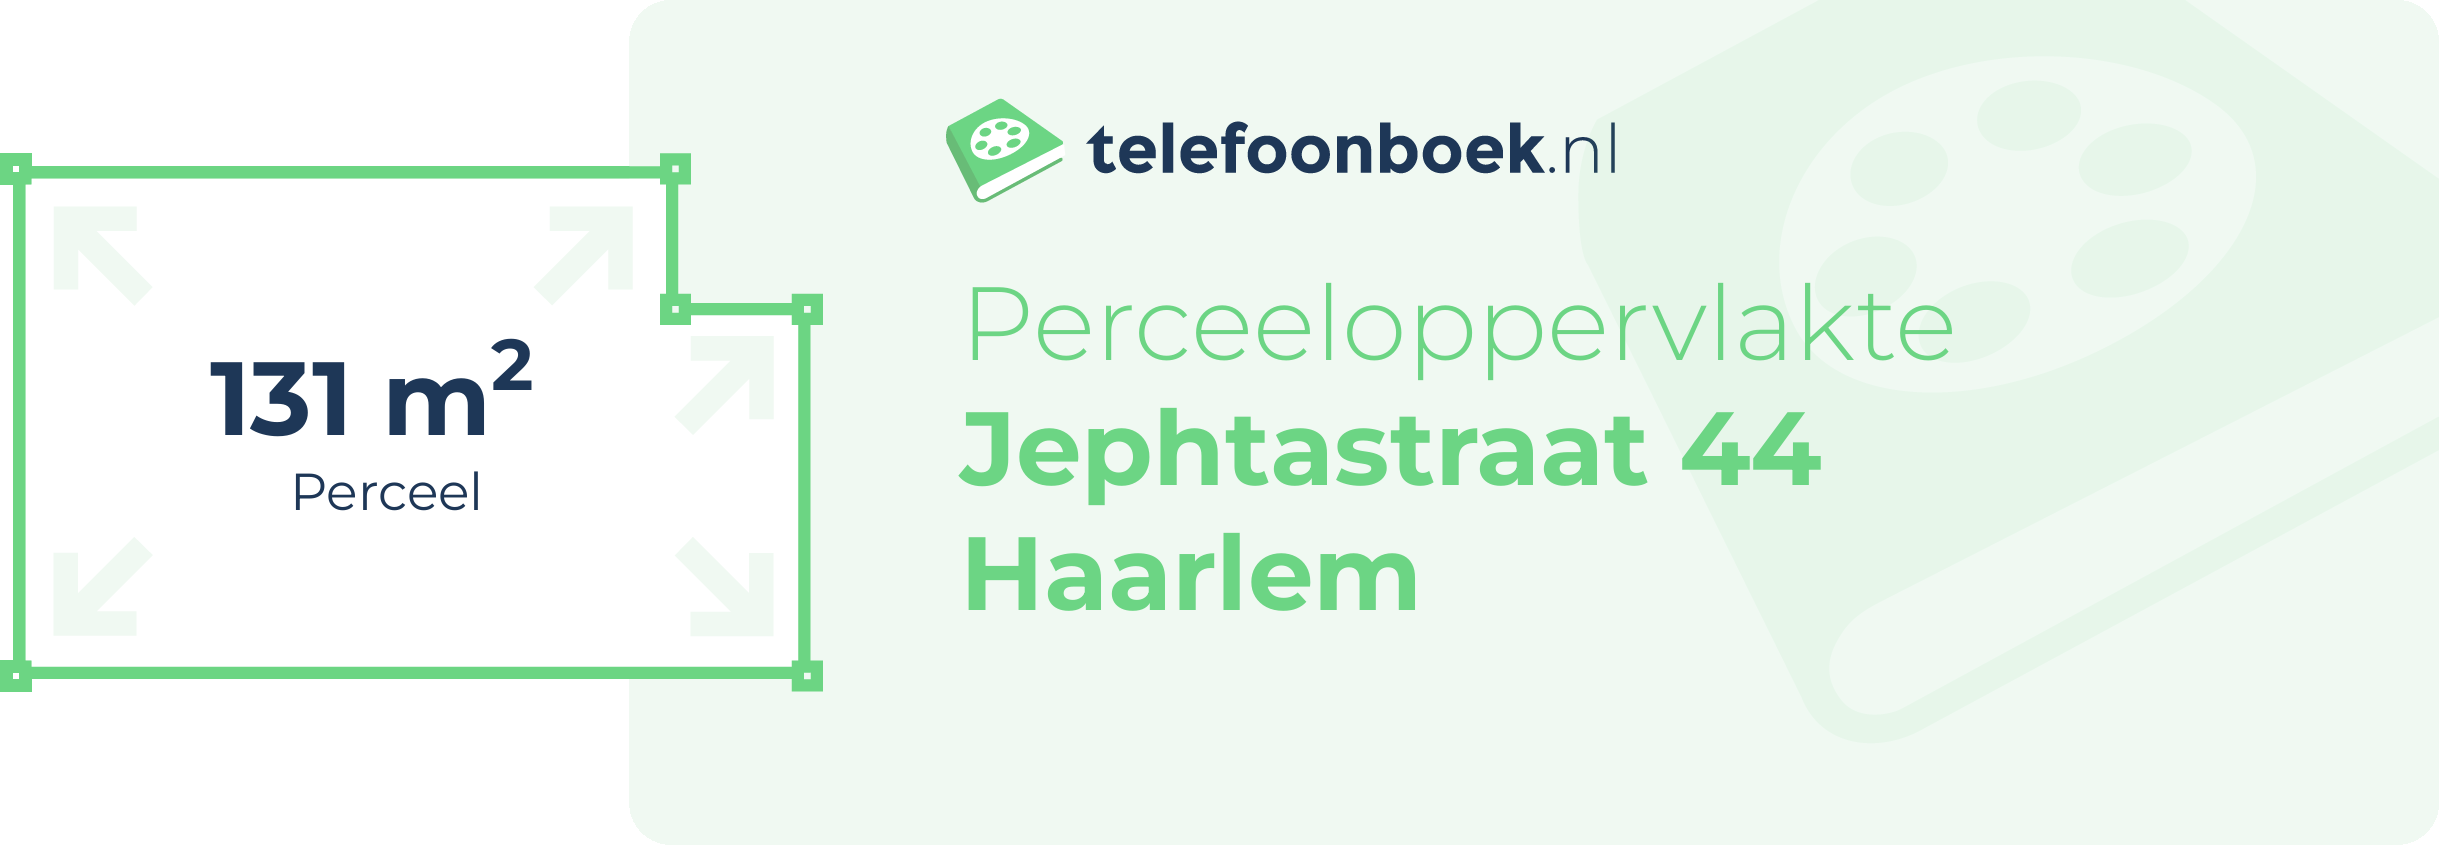 Perceeloppervlakte Jephtastraat 44 Haarlem